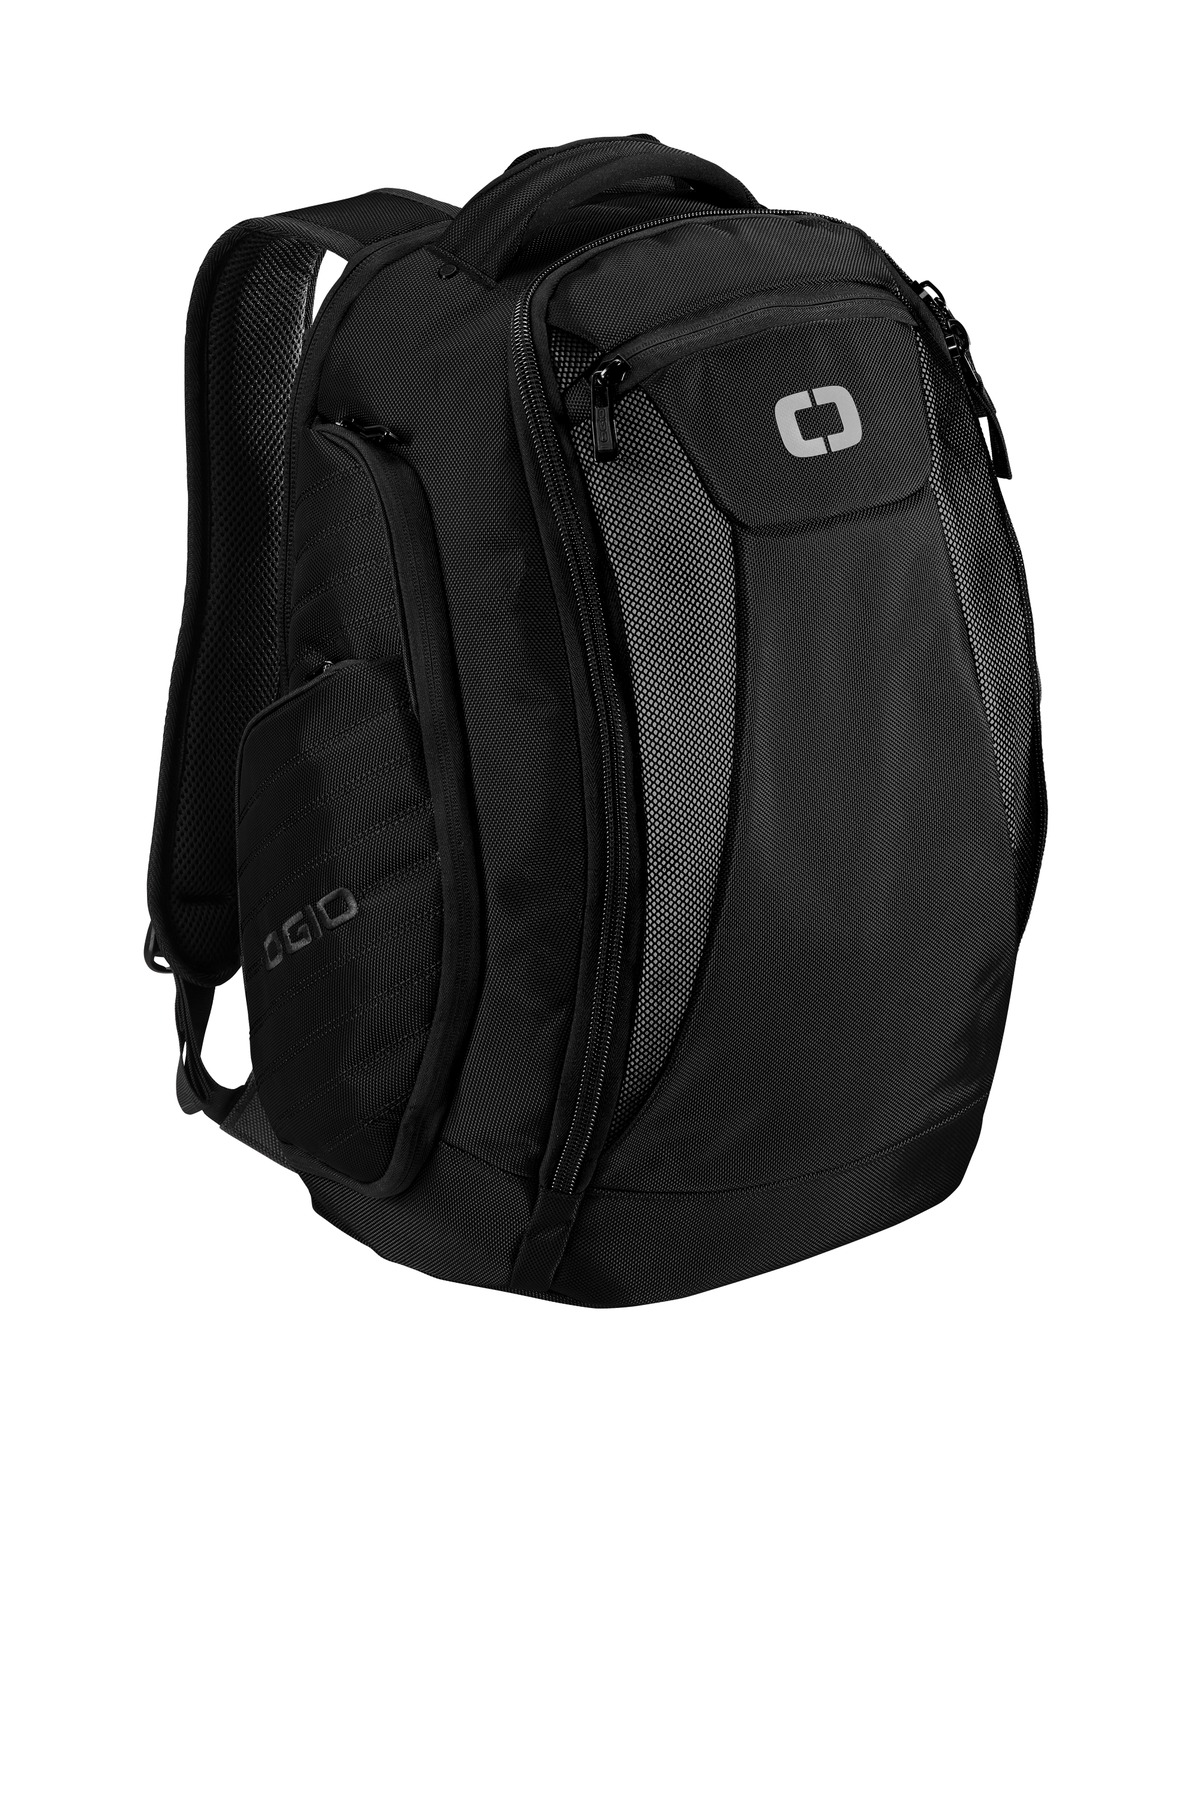 OGIO Hospitality Bags ® Flashpoint Pack.-OGIO